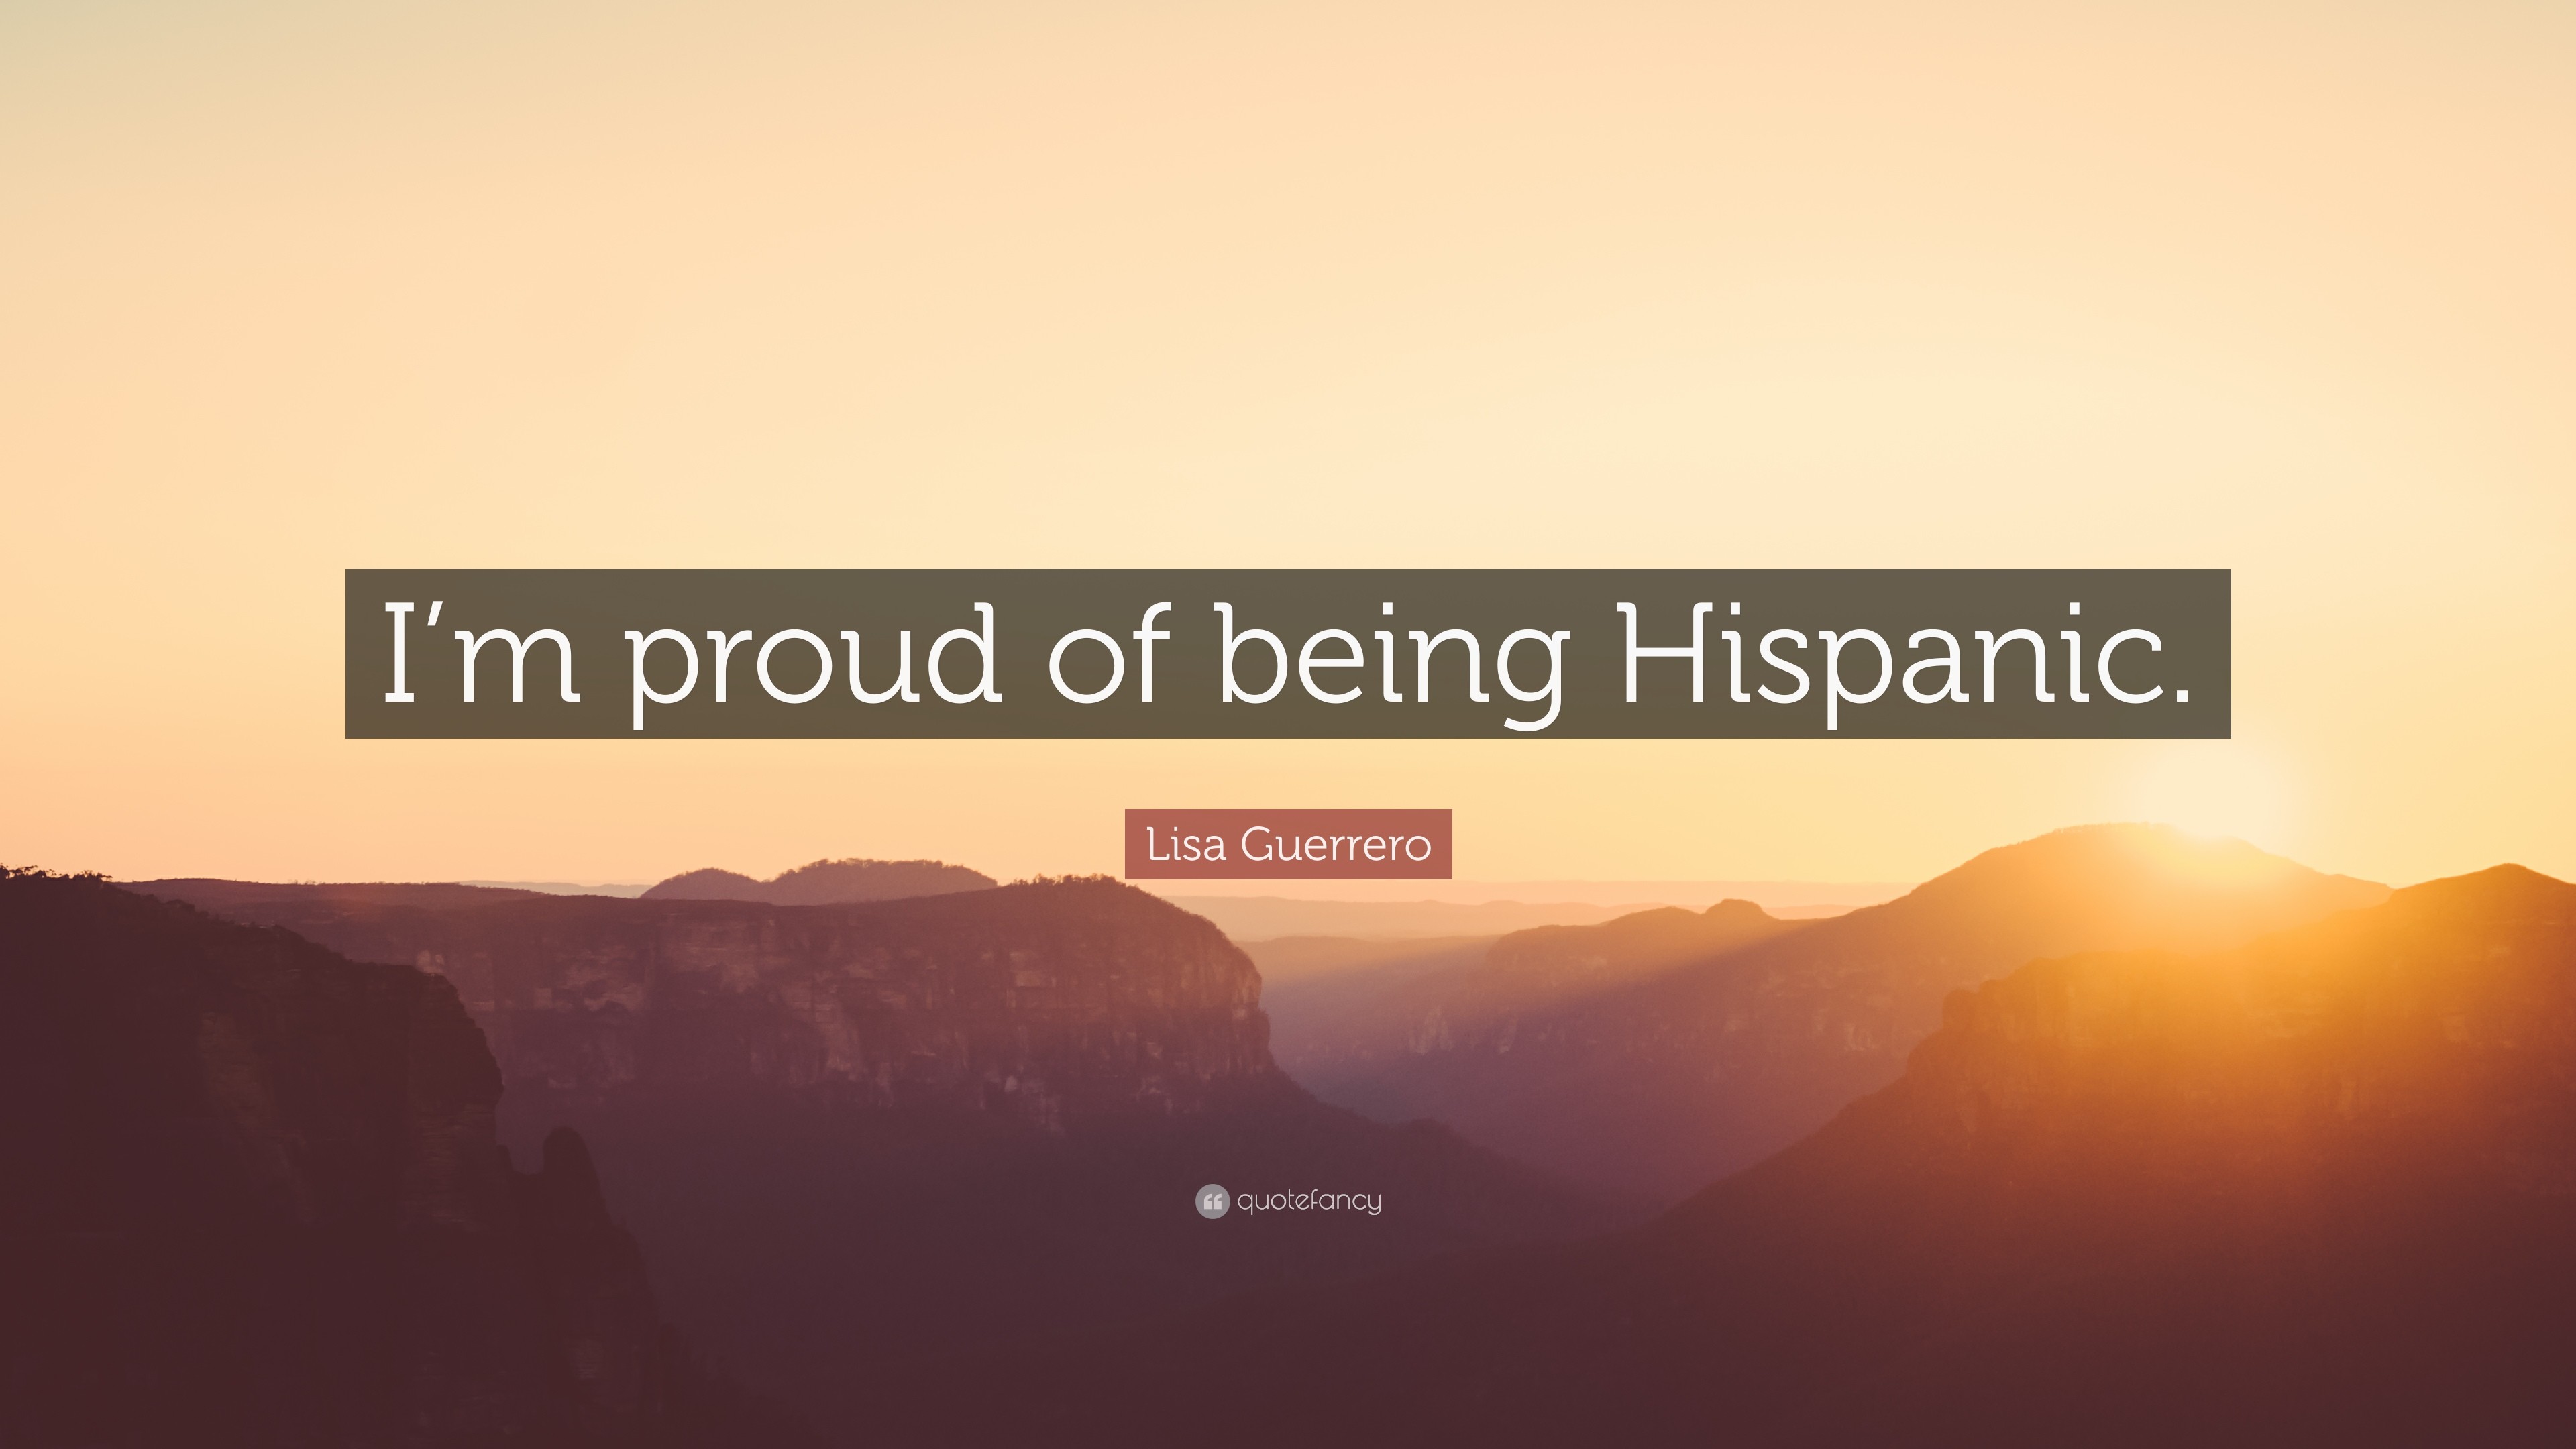 3840x2160 Lisa Guerrero Quote: “I'm proud of being Hispanic.”